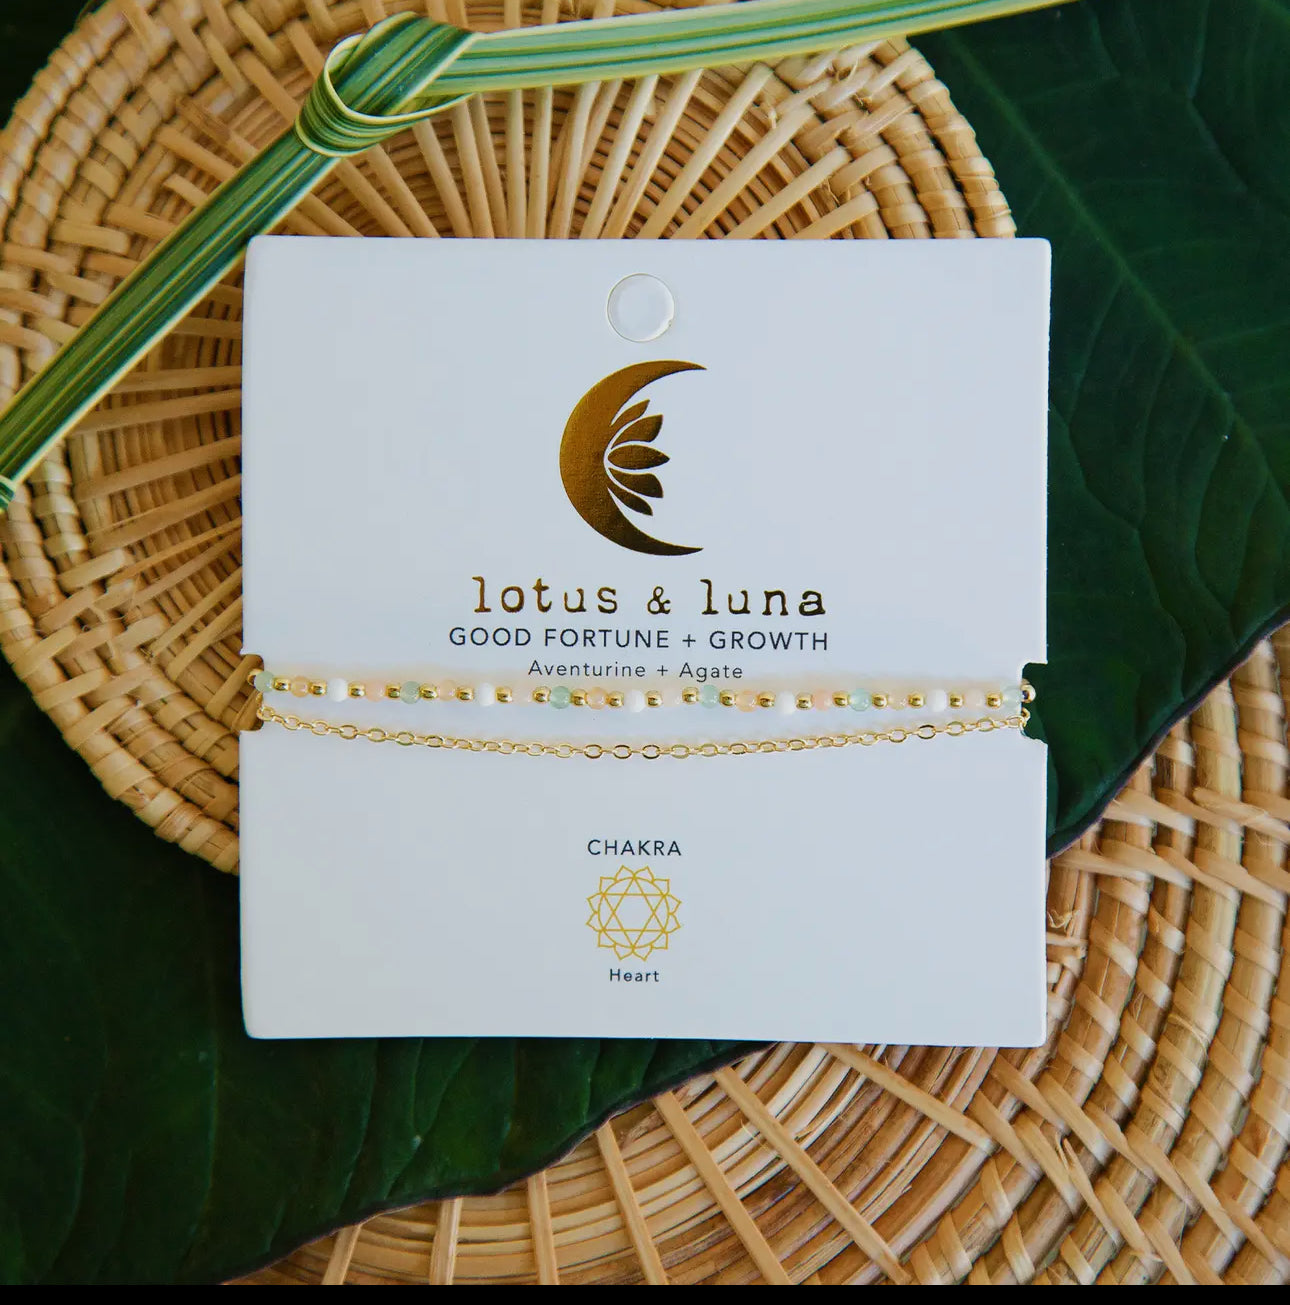 Lotus & Luna Healing Bracelets